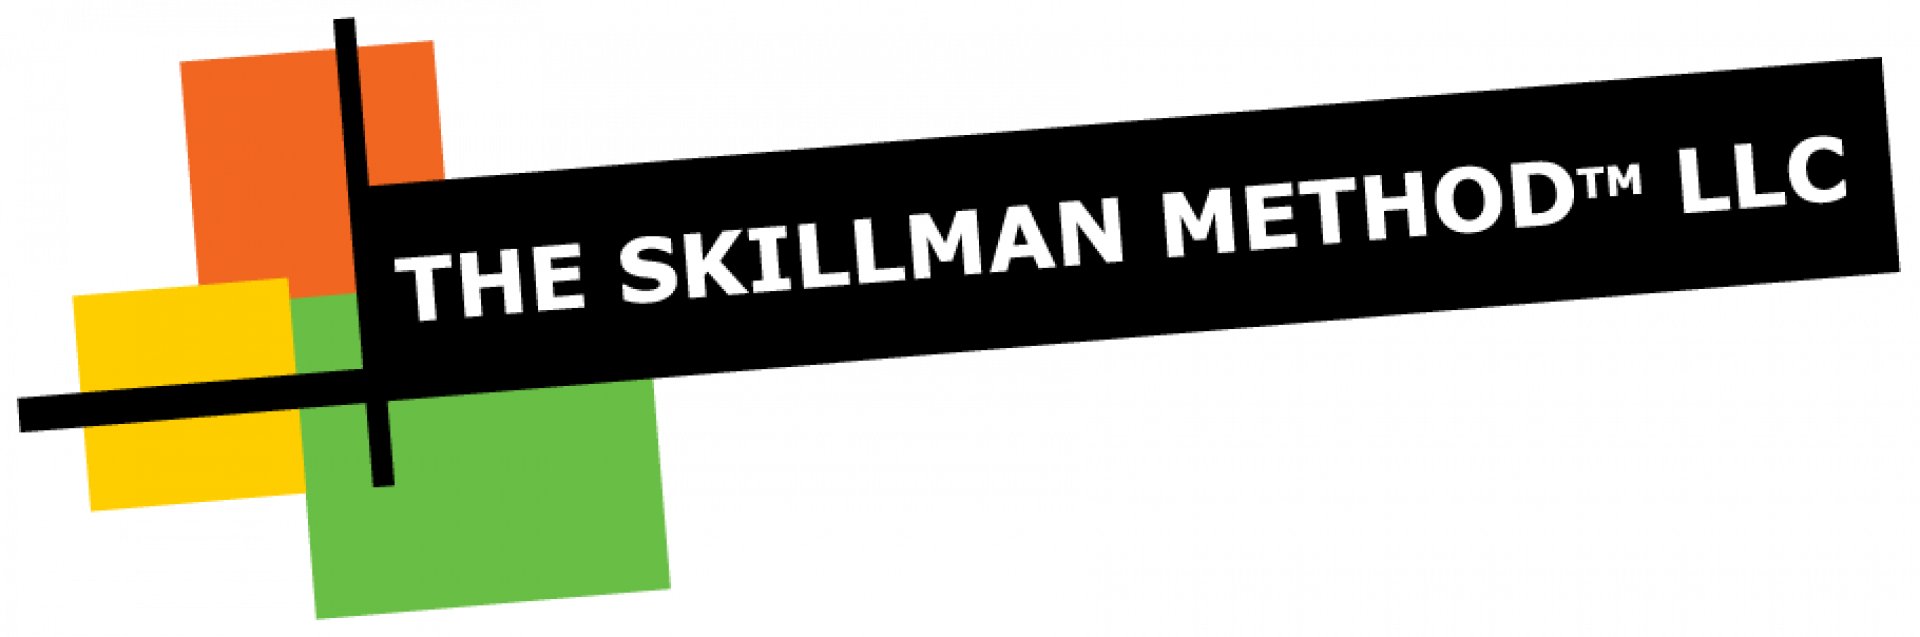 The Skillman Method Logo2